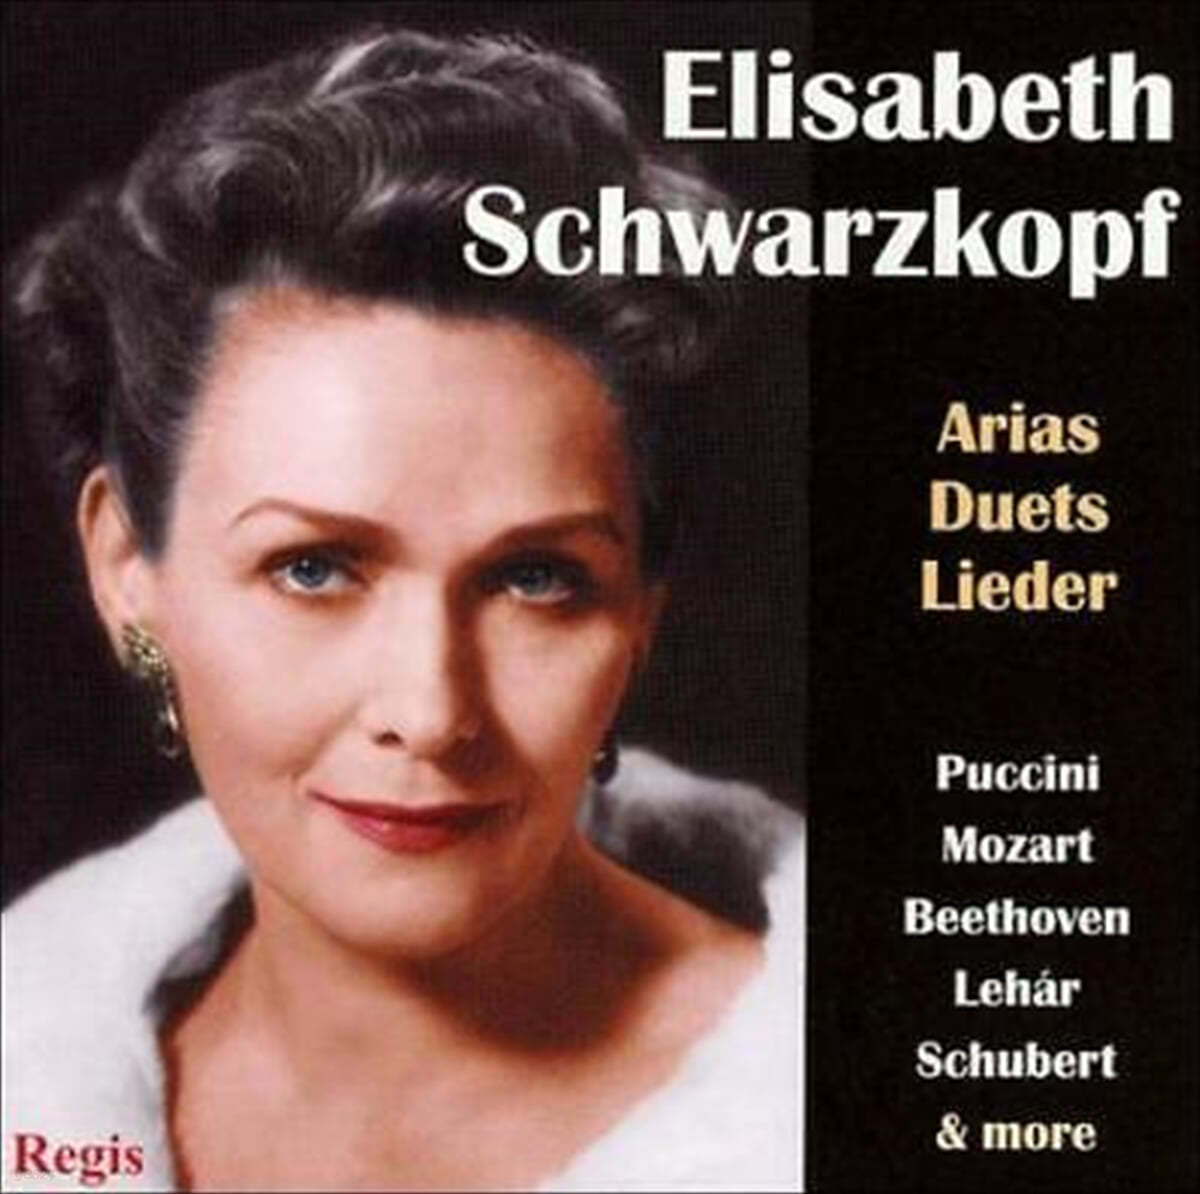 Elisabeth Schwarzkopf 슈바르츠코프의 오페라 아리아와 듀엣 모음집 - 엘리자베트 슈바르츠코프 (Elisabeth Schwarzkopf: Popular Arias, Duets & Lieder)